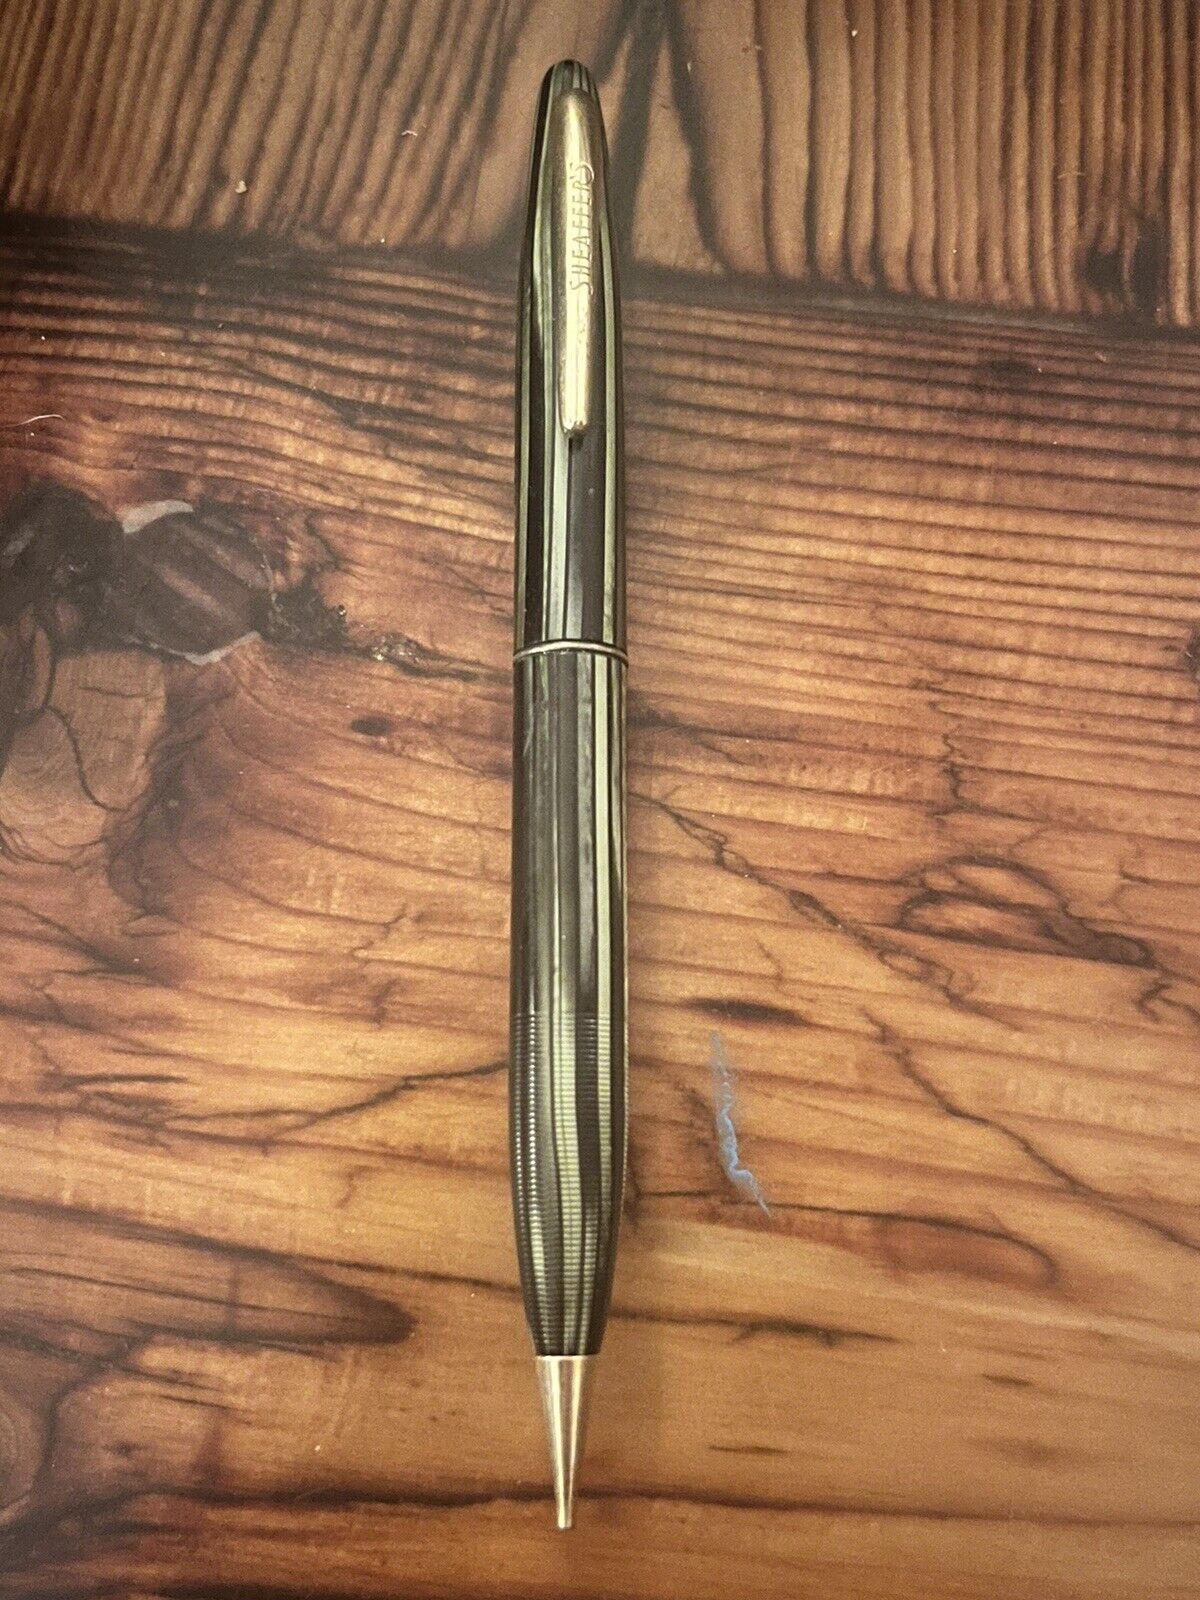 Vintage Old Sheaffer’s Mechanical Pencil :) Very Nice